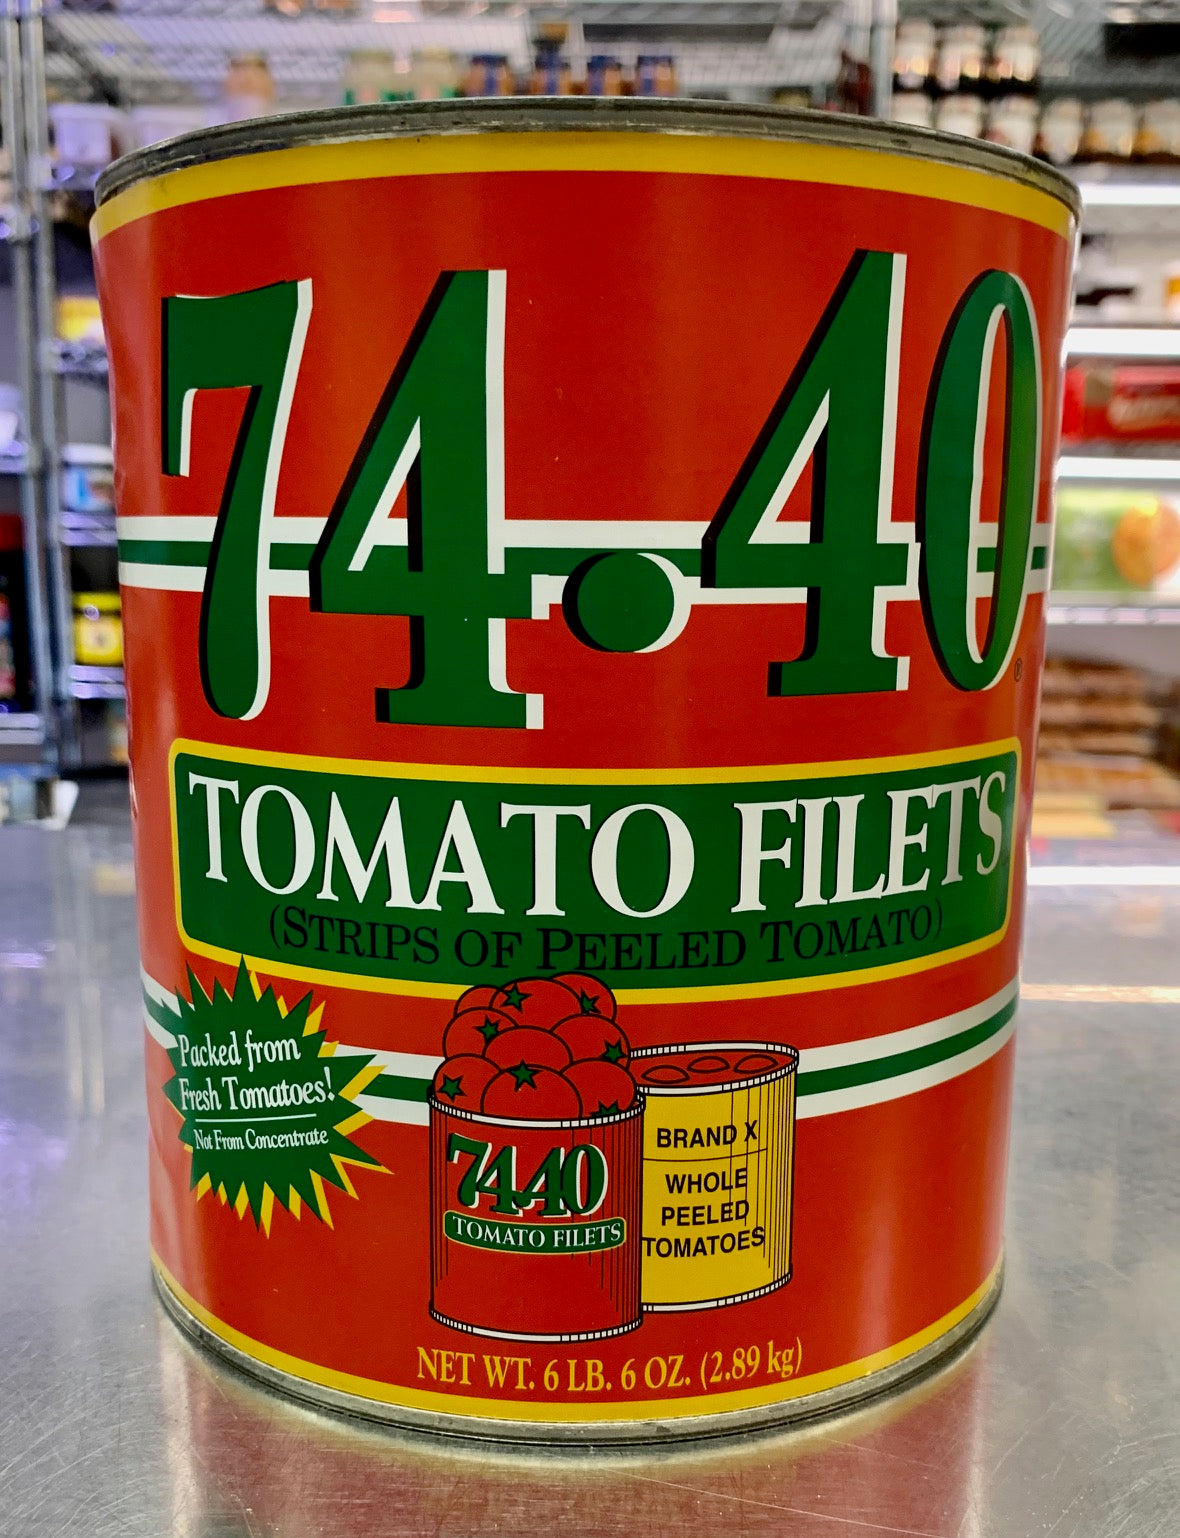 Tomato Filets - Strips of Peeled Tomatoes